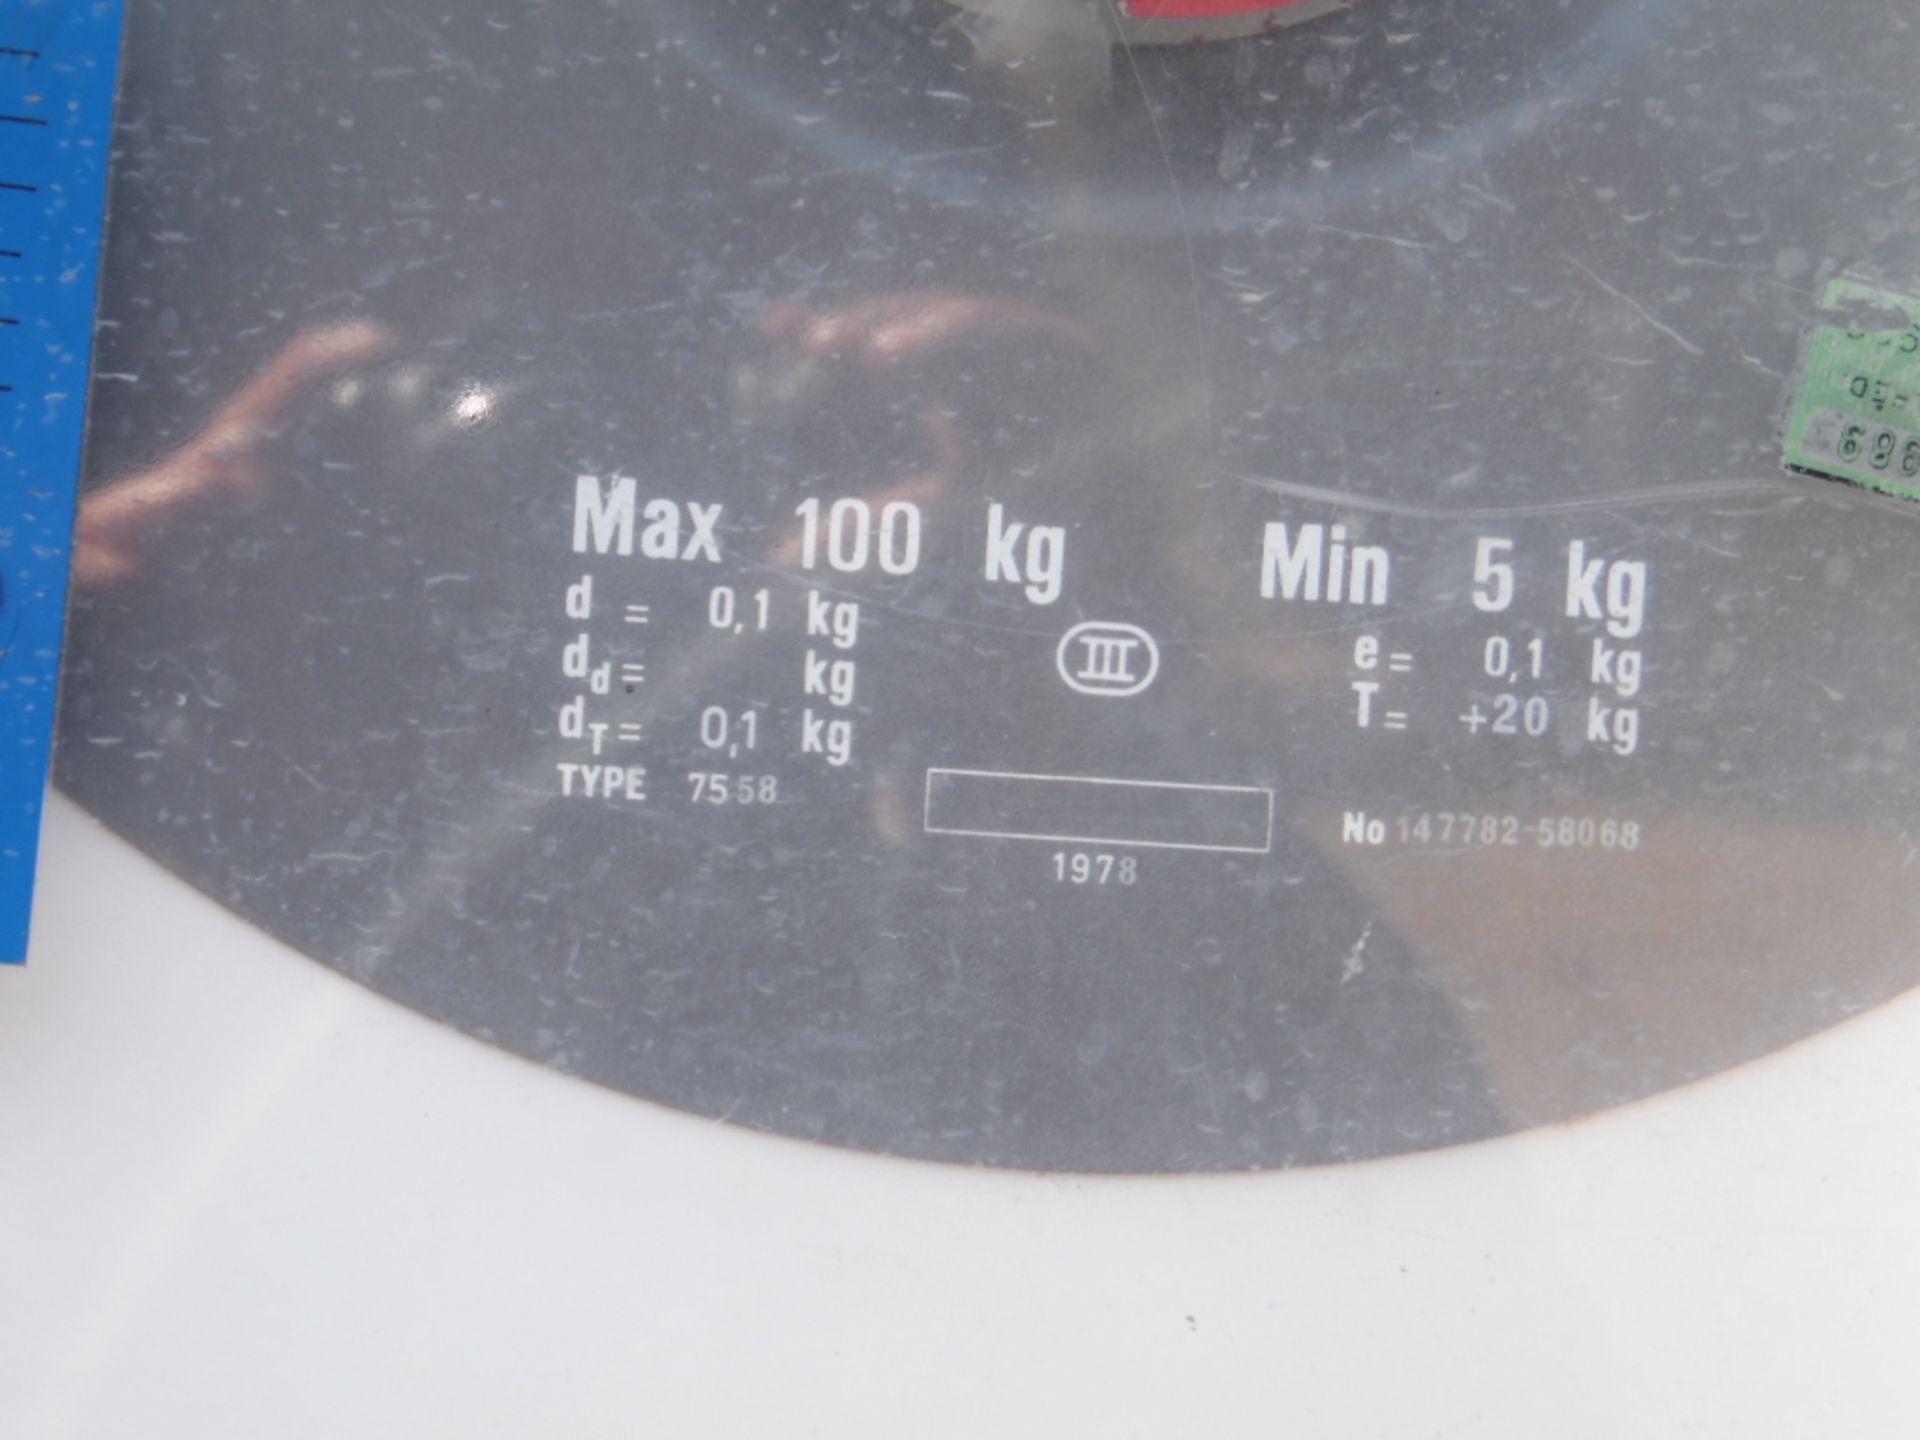 Lot of a BERKEL brand scale for 100 kg. (Lote de una bascula marca BERKEL para 100 kg.) - Image 3 of 3